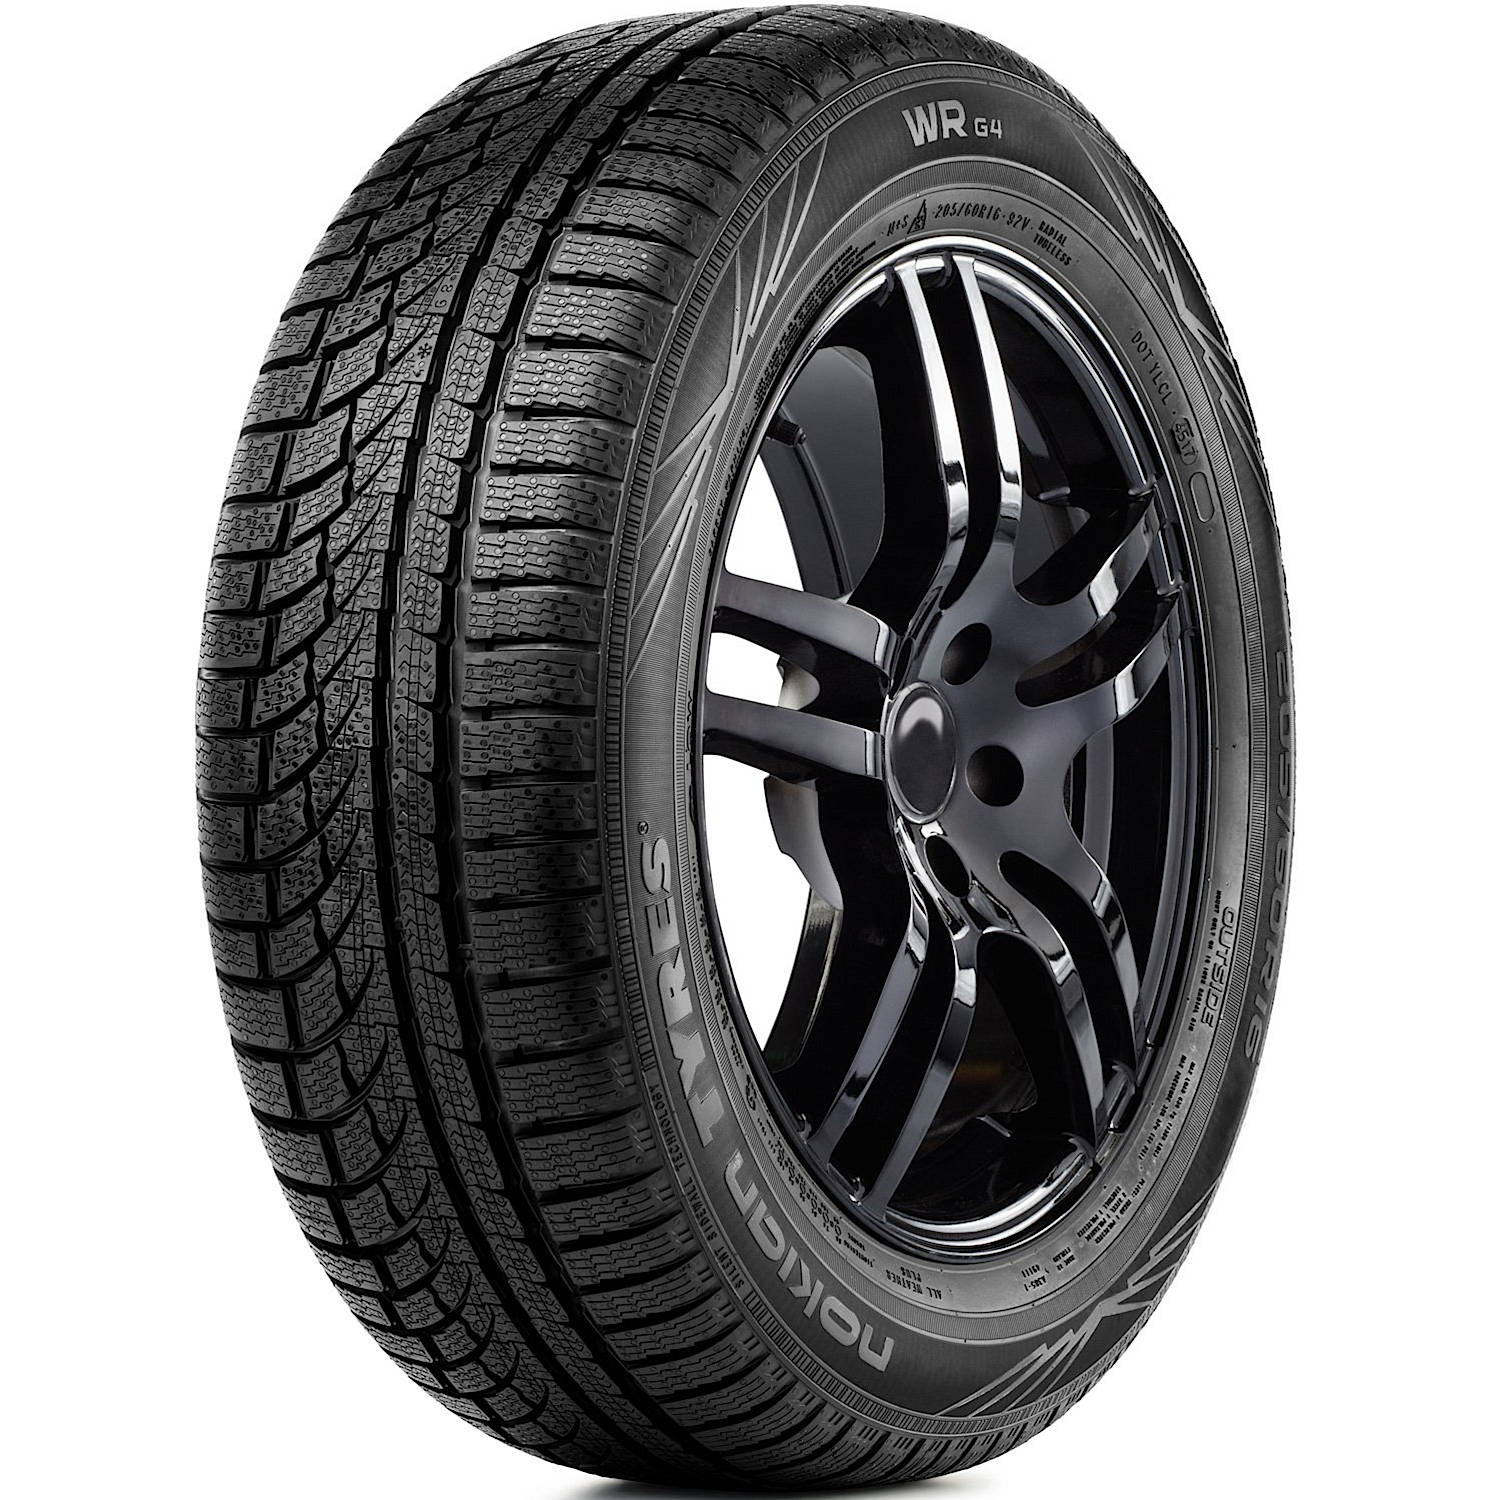 NOKIAN WR G4 225/50R17 (25.9X8.9R 17) Tires